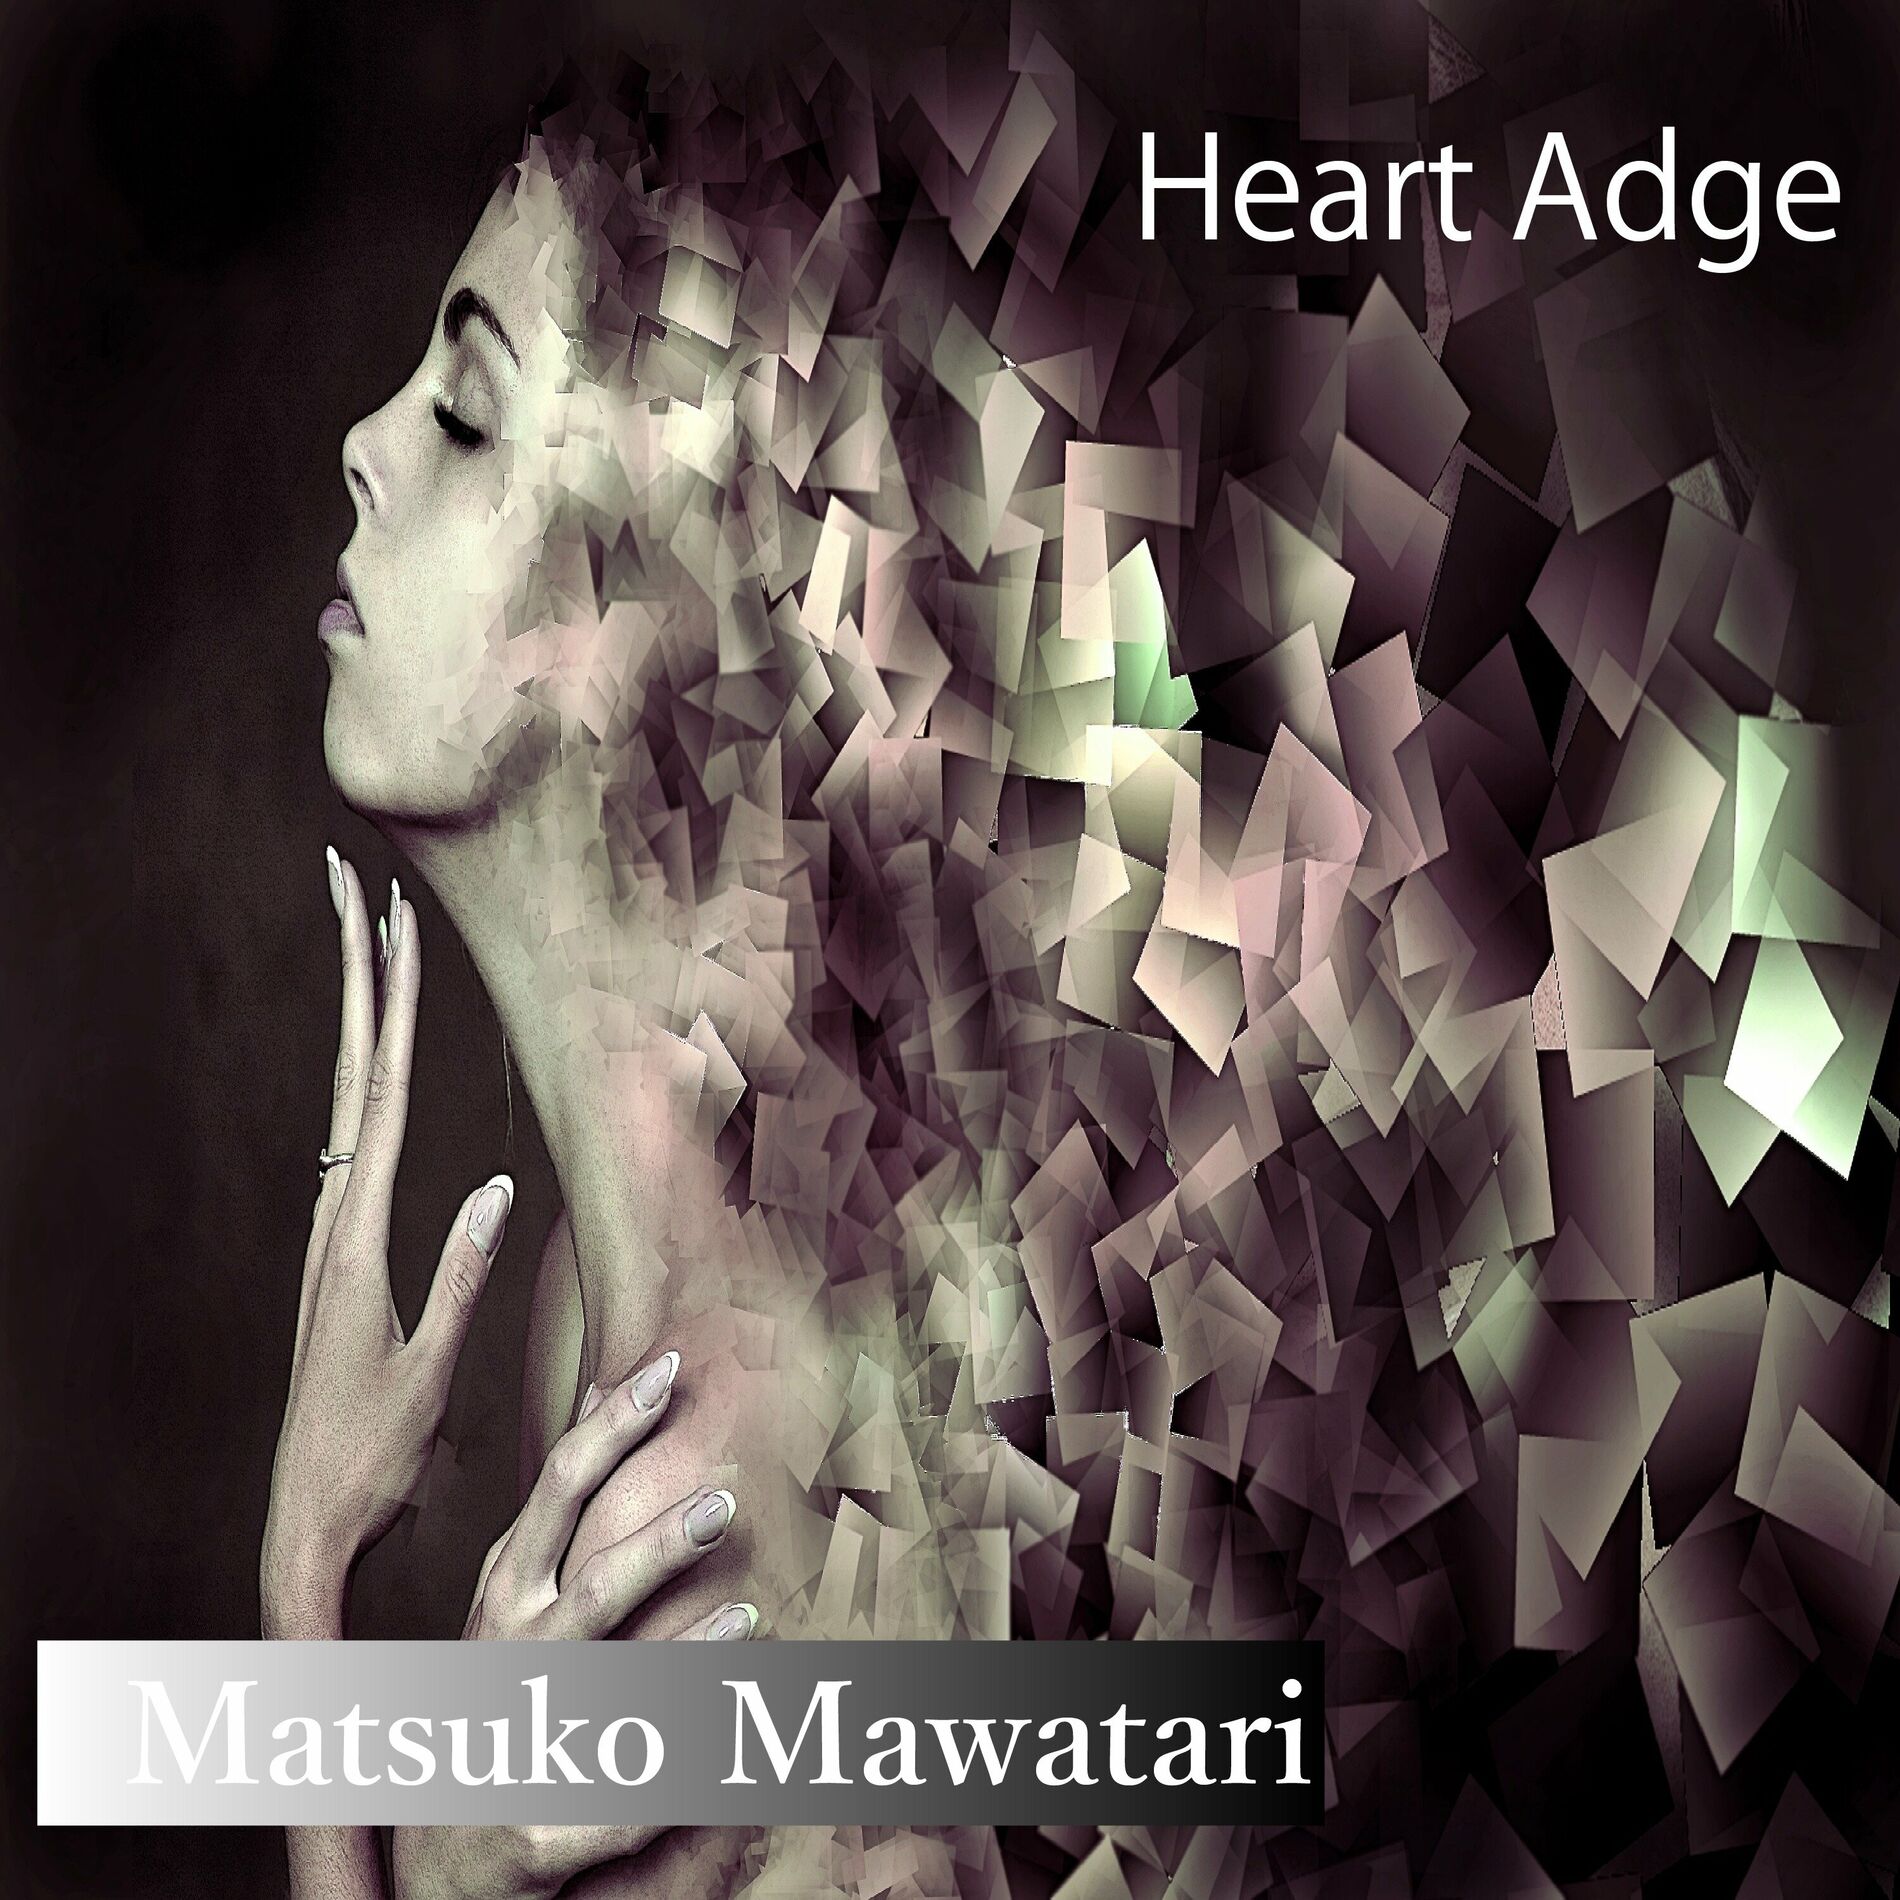 Matsuko Mawatari: albums, songs, playlists | Listen on Deezer